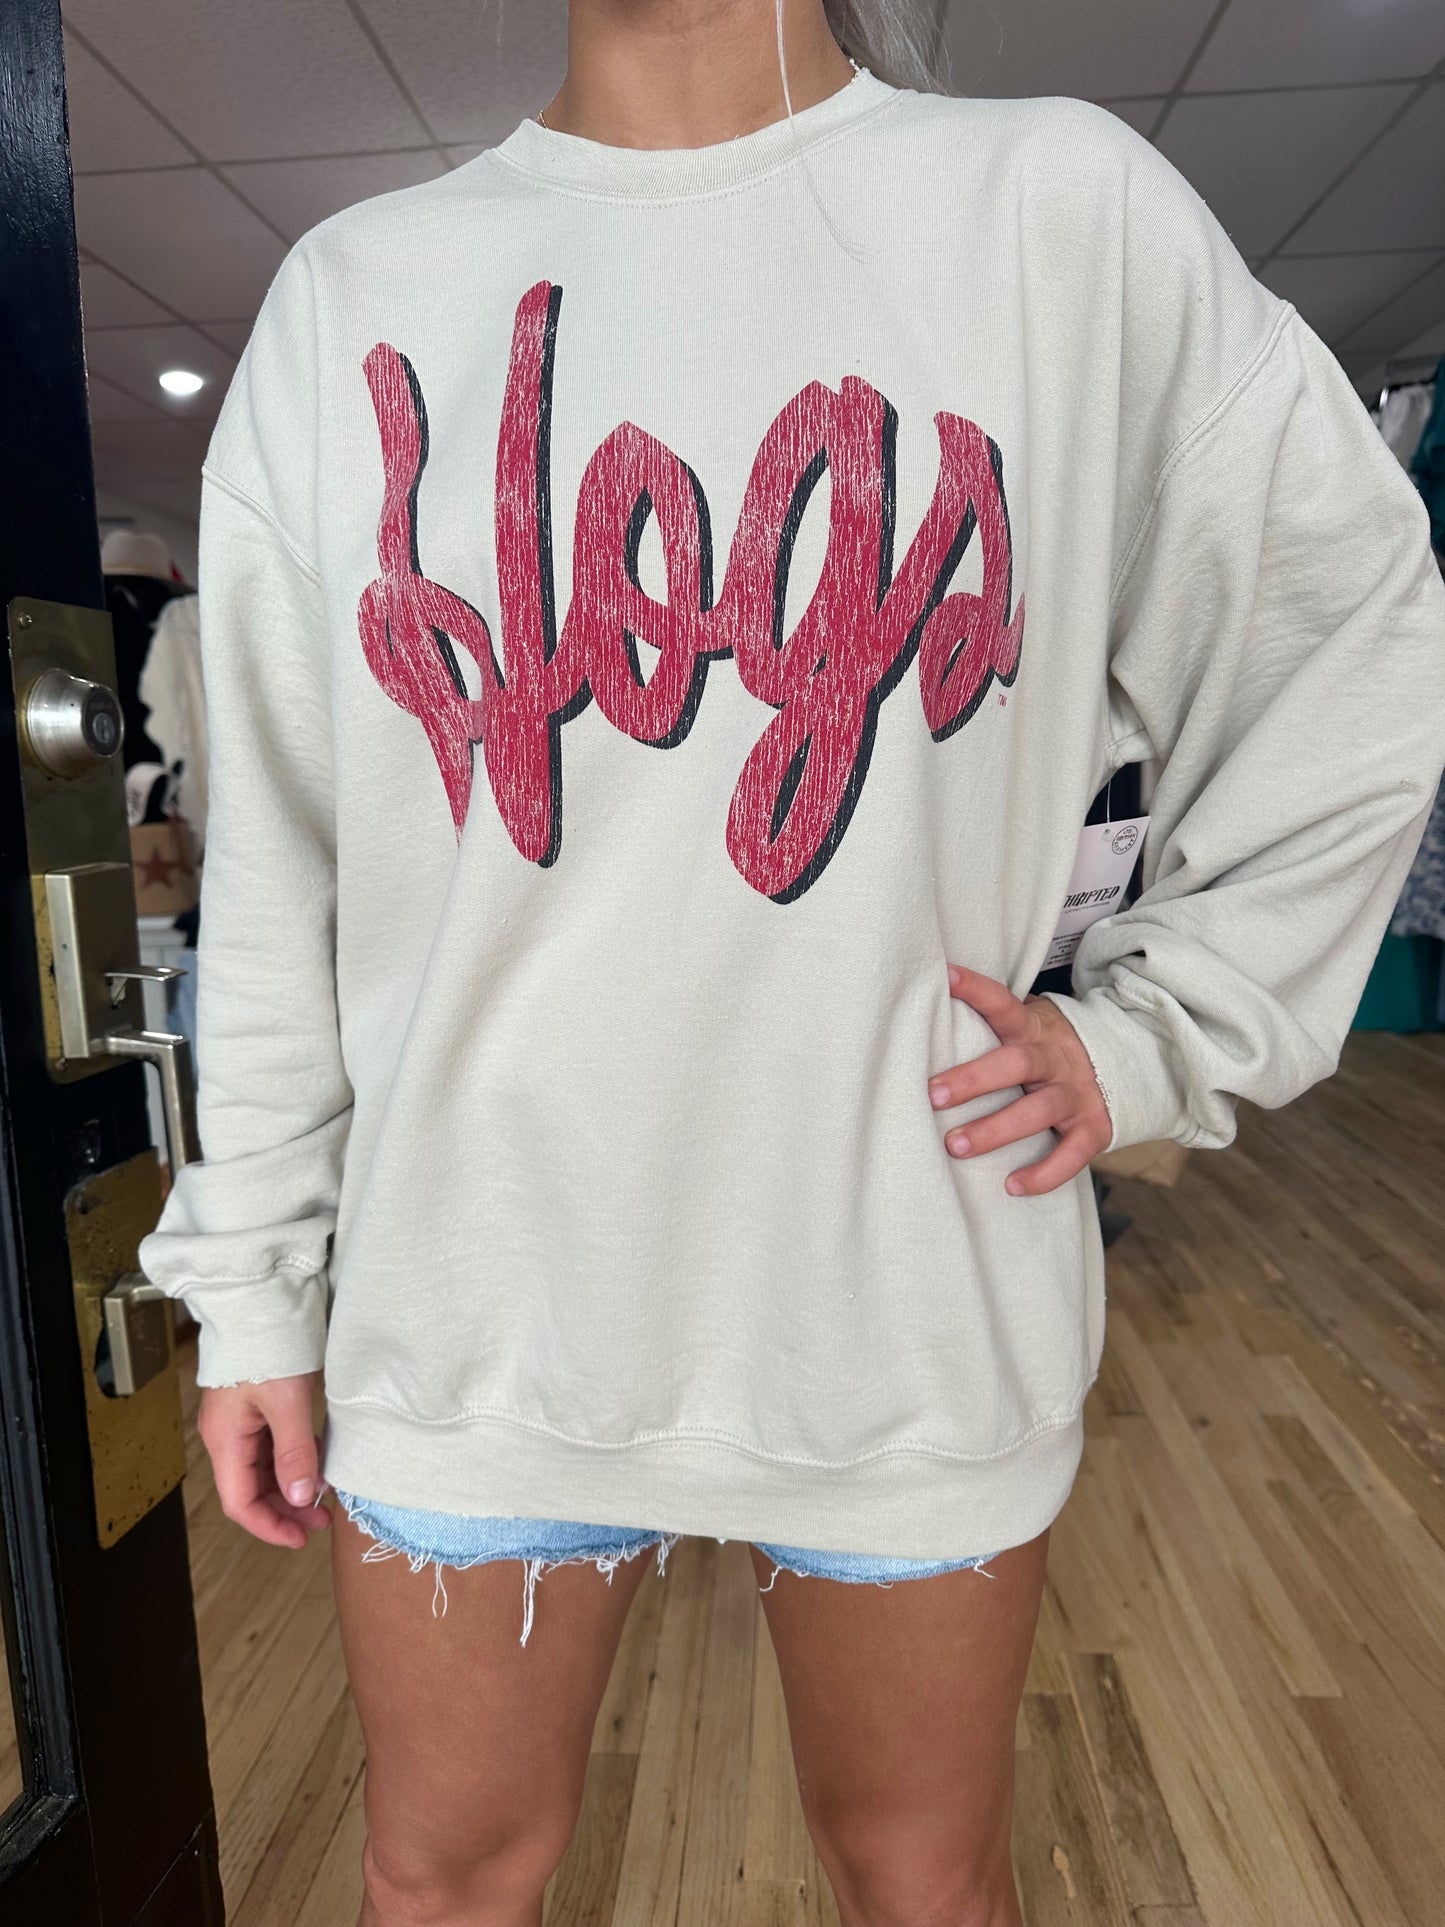 LivyLu Hogs Sand thrifted sweatshirt